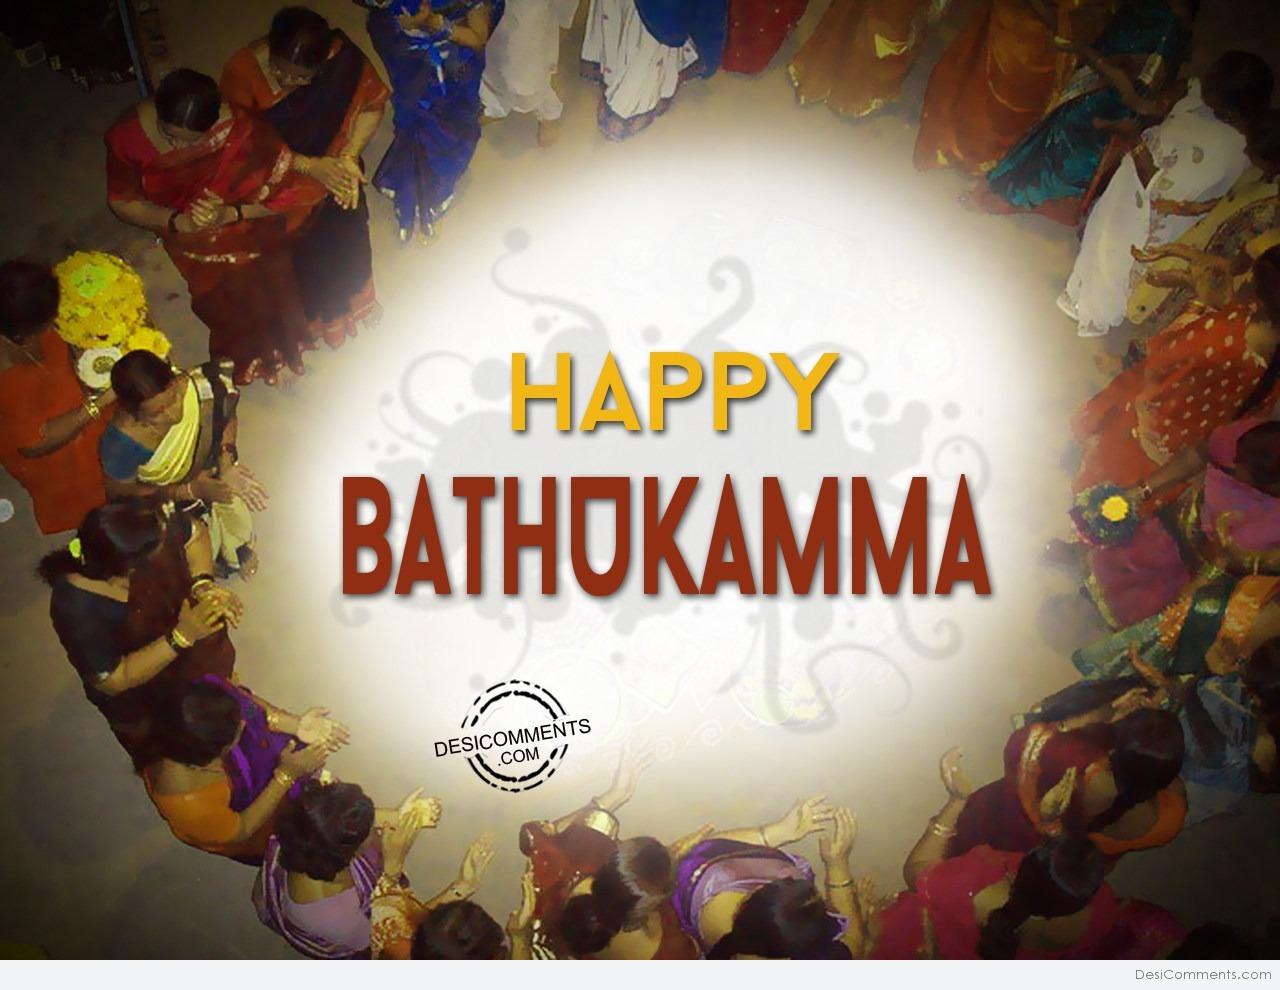 Bathukamma PNG Transparent Images Free Download | Vector Files | Pngtree